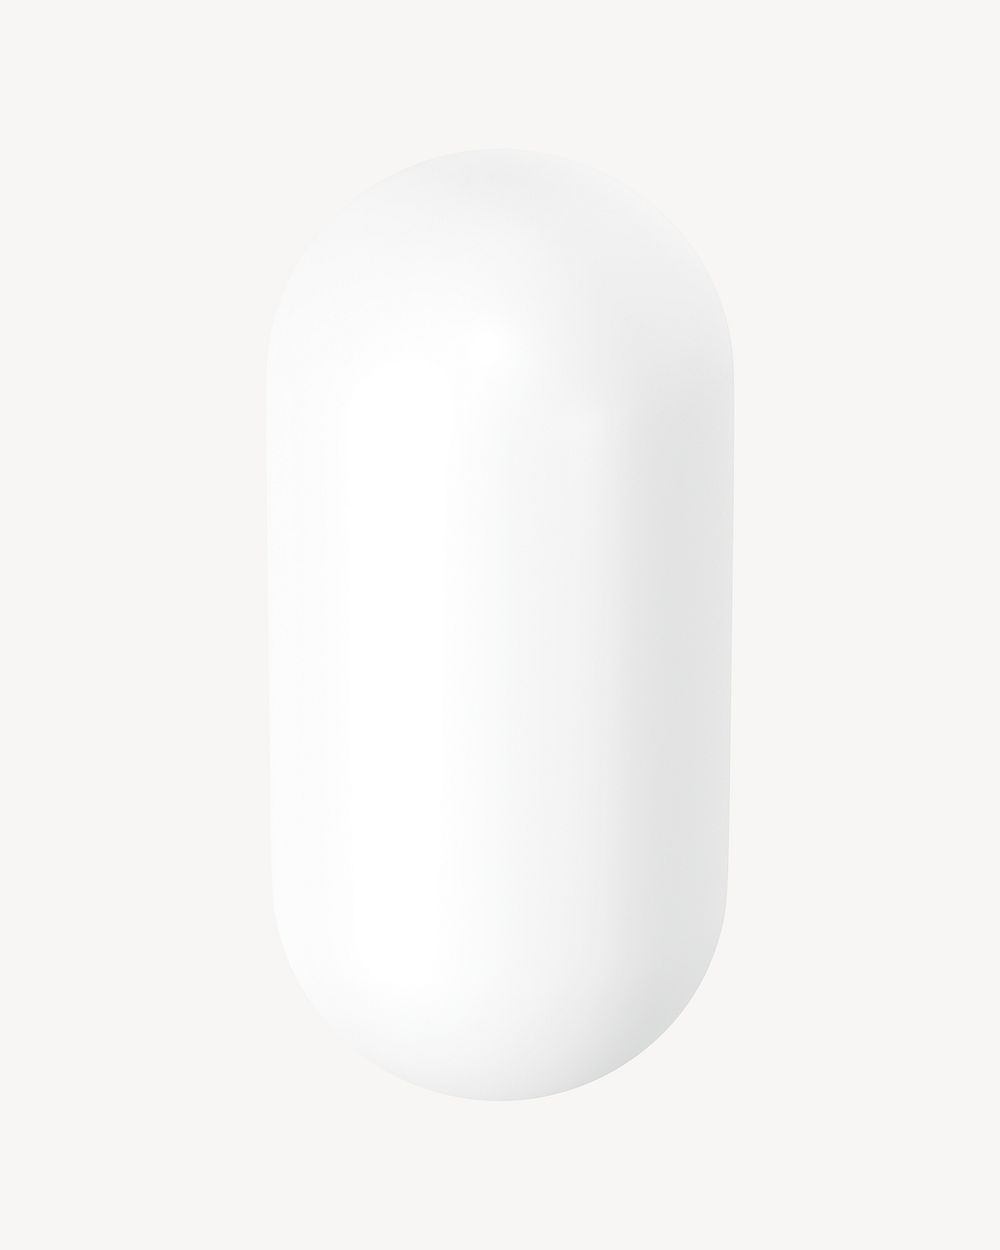 3D white capsule shape, geometric clipart psd